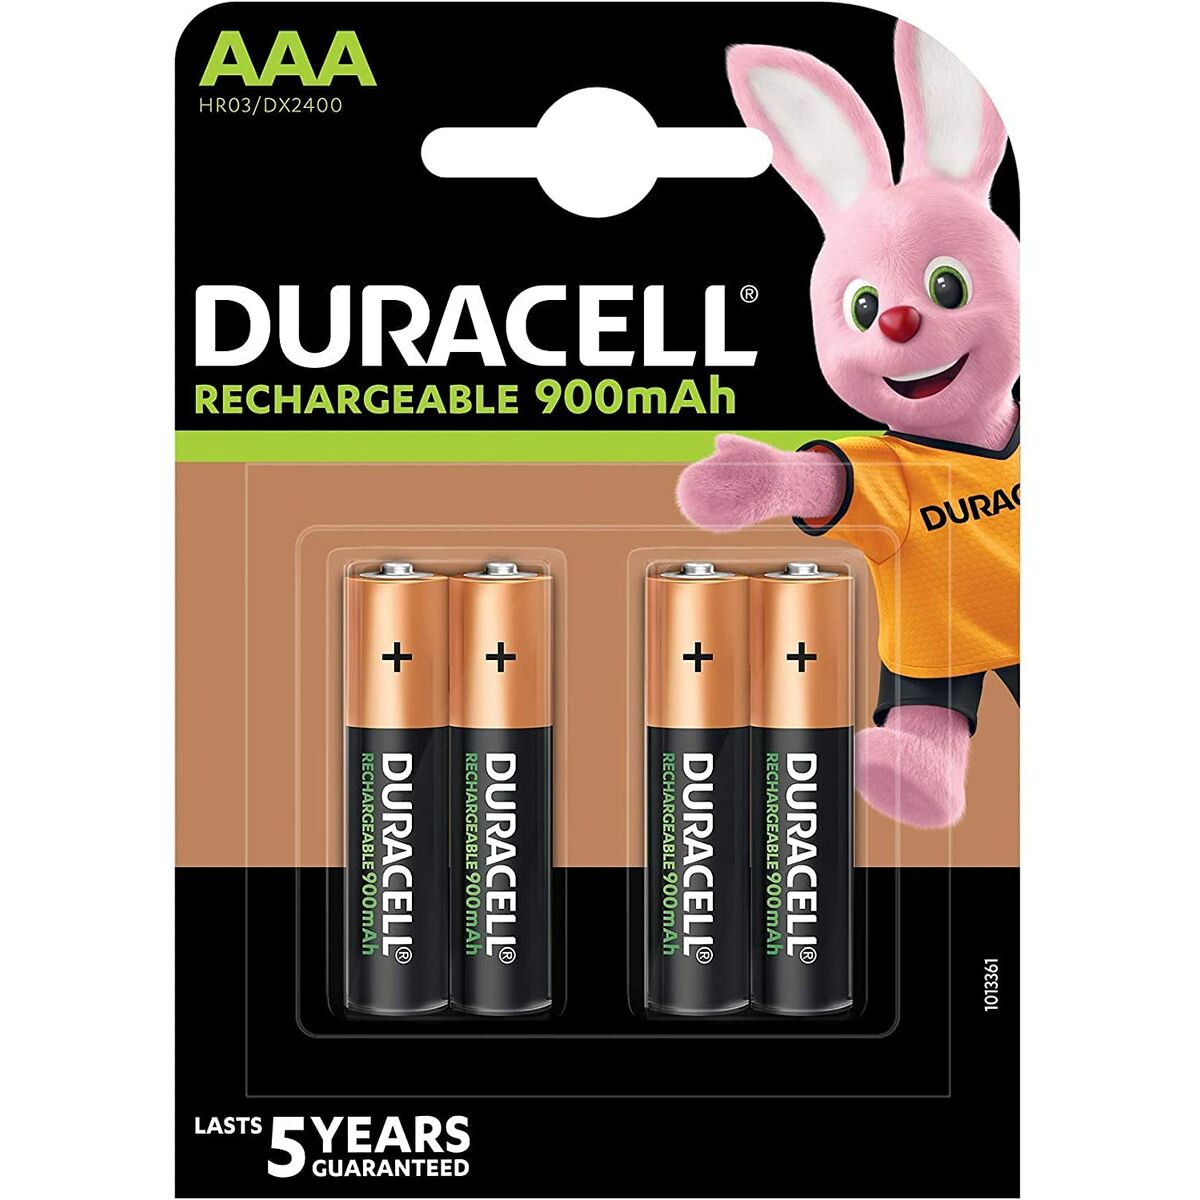 Baterii Reîncărcabile DURACELL HR03 AAA 800 mAh (4 pcs) 900 mAh